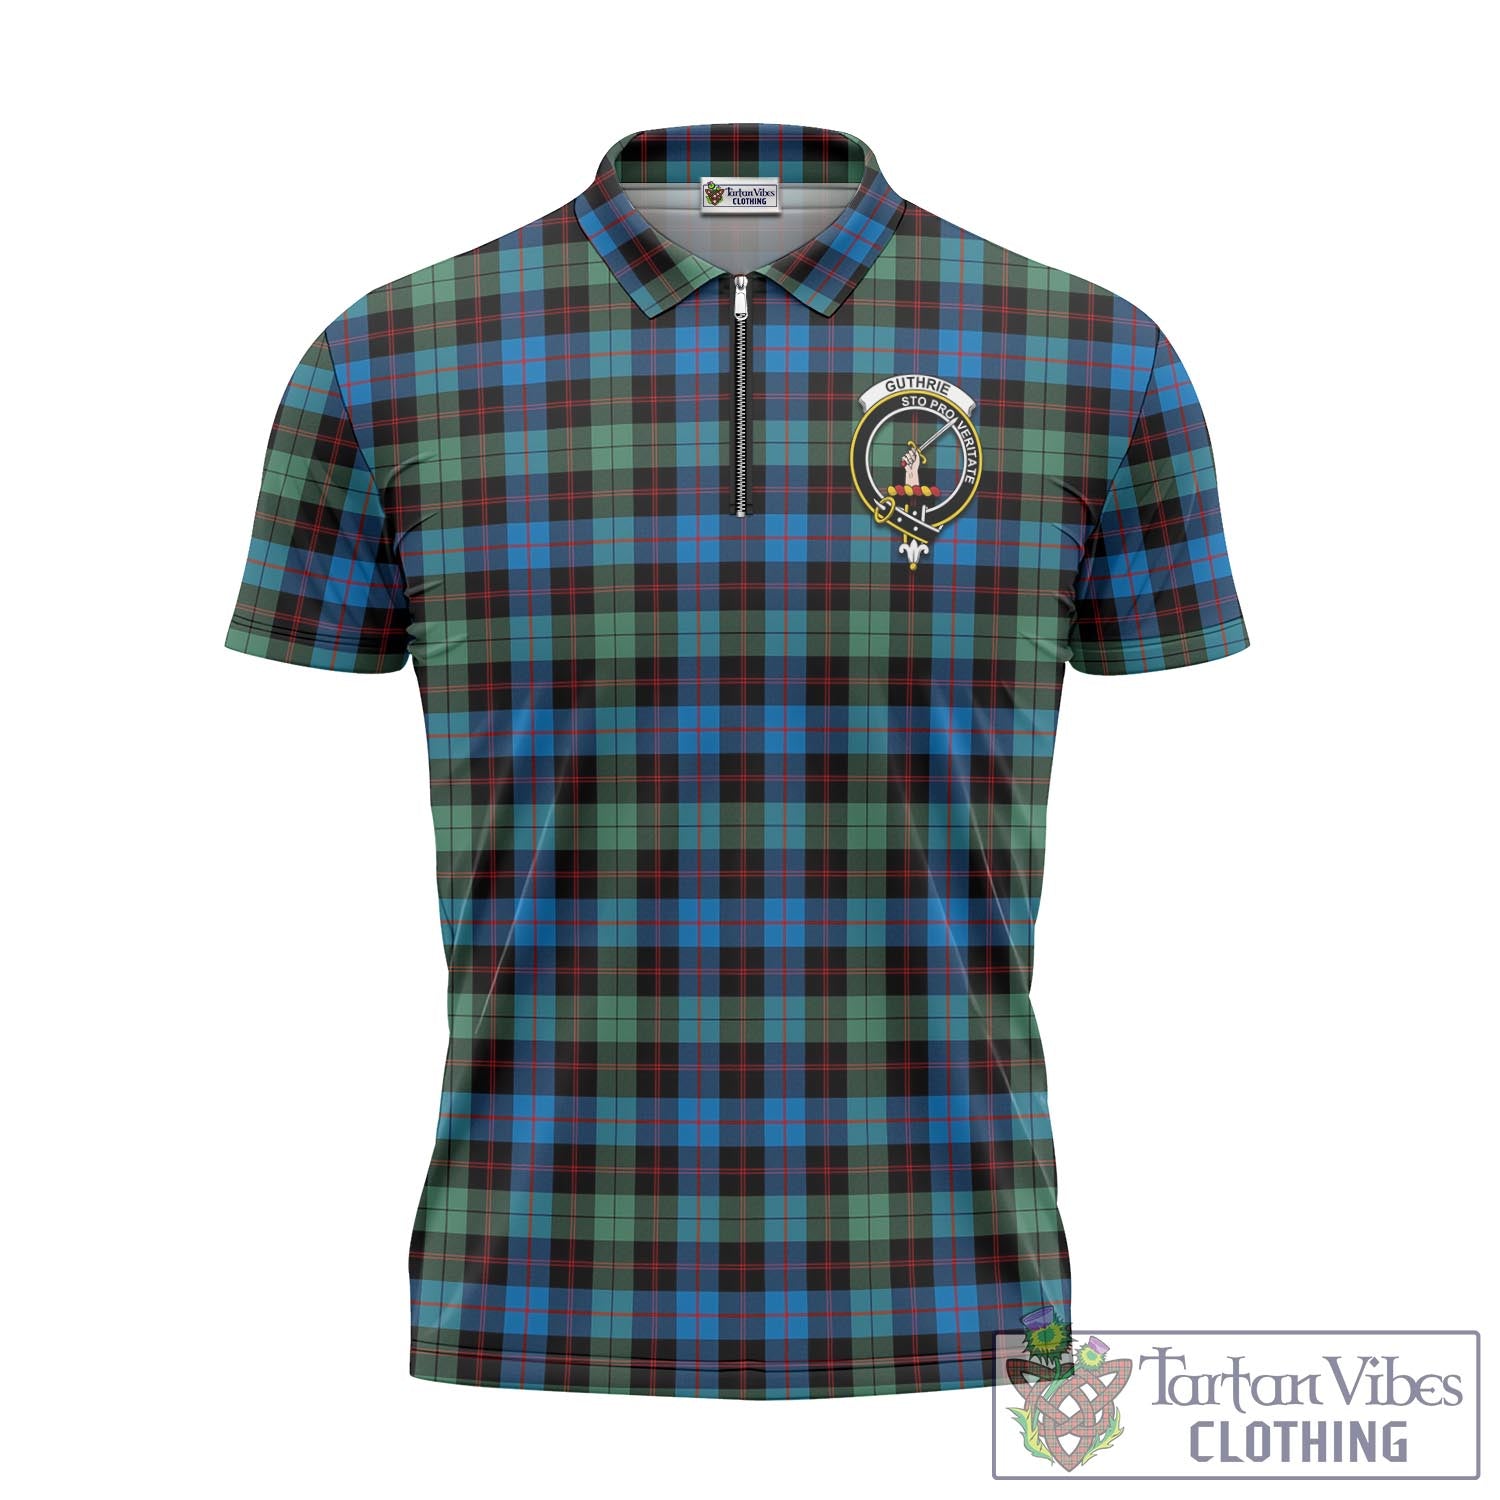 Tartan Vibes Clothing Guthrie Ancient Tartan Zipper Polo Shirt with Family Crest